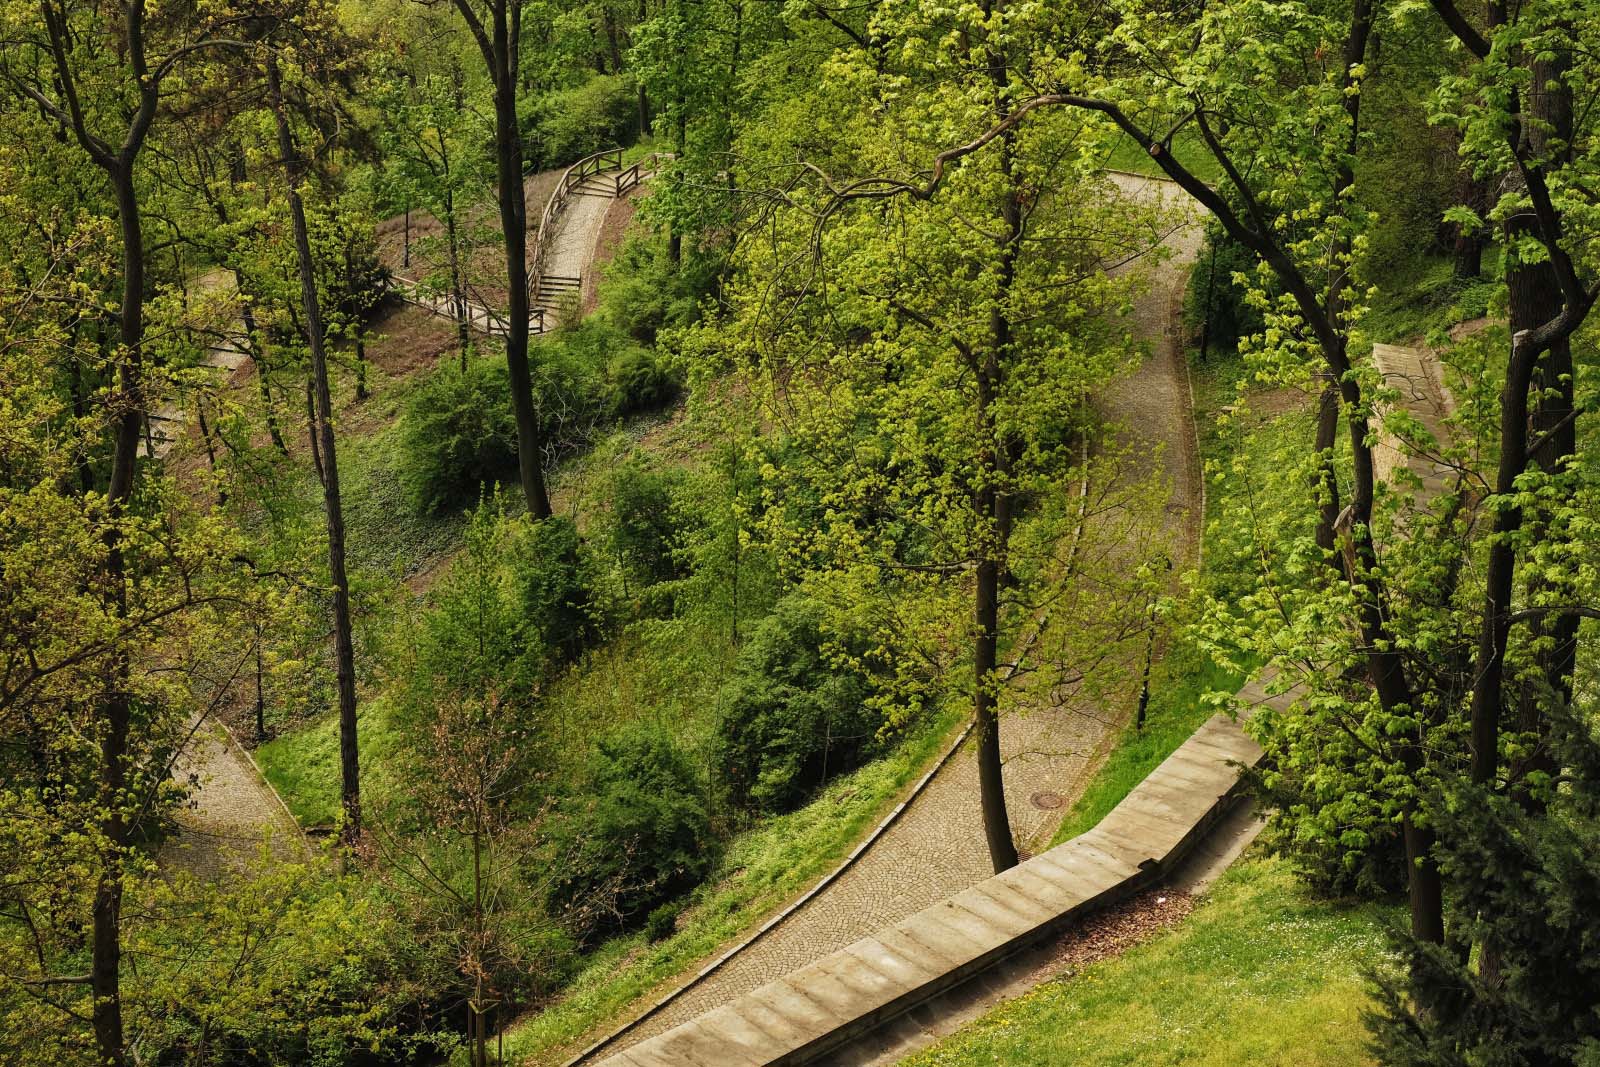 Zig zag switchback pathway winds down the steep hillside, Kinsky Garden, south-eastern slope of Petřín